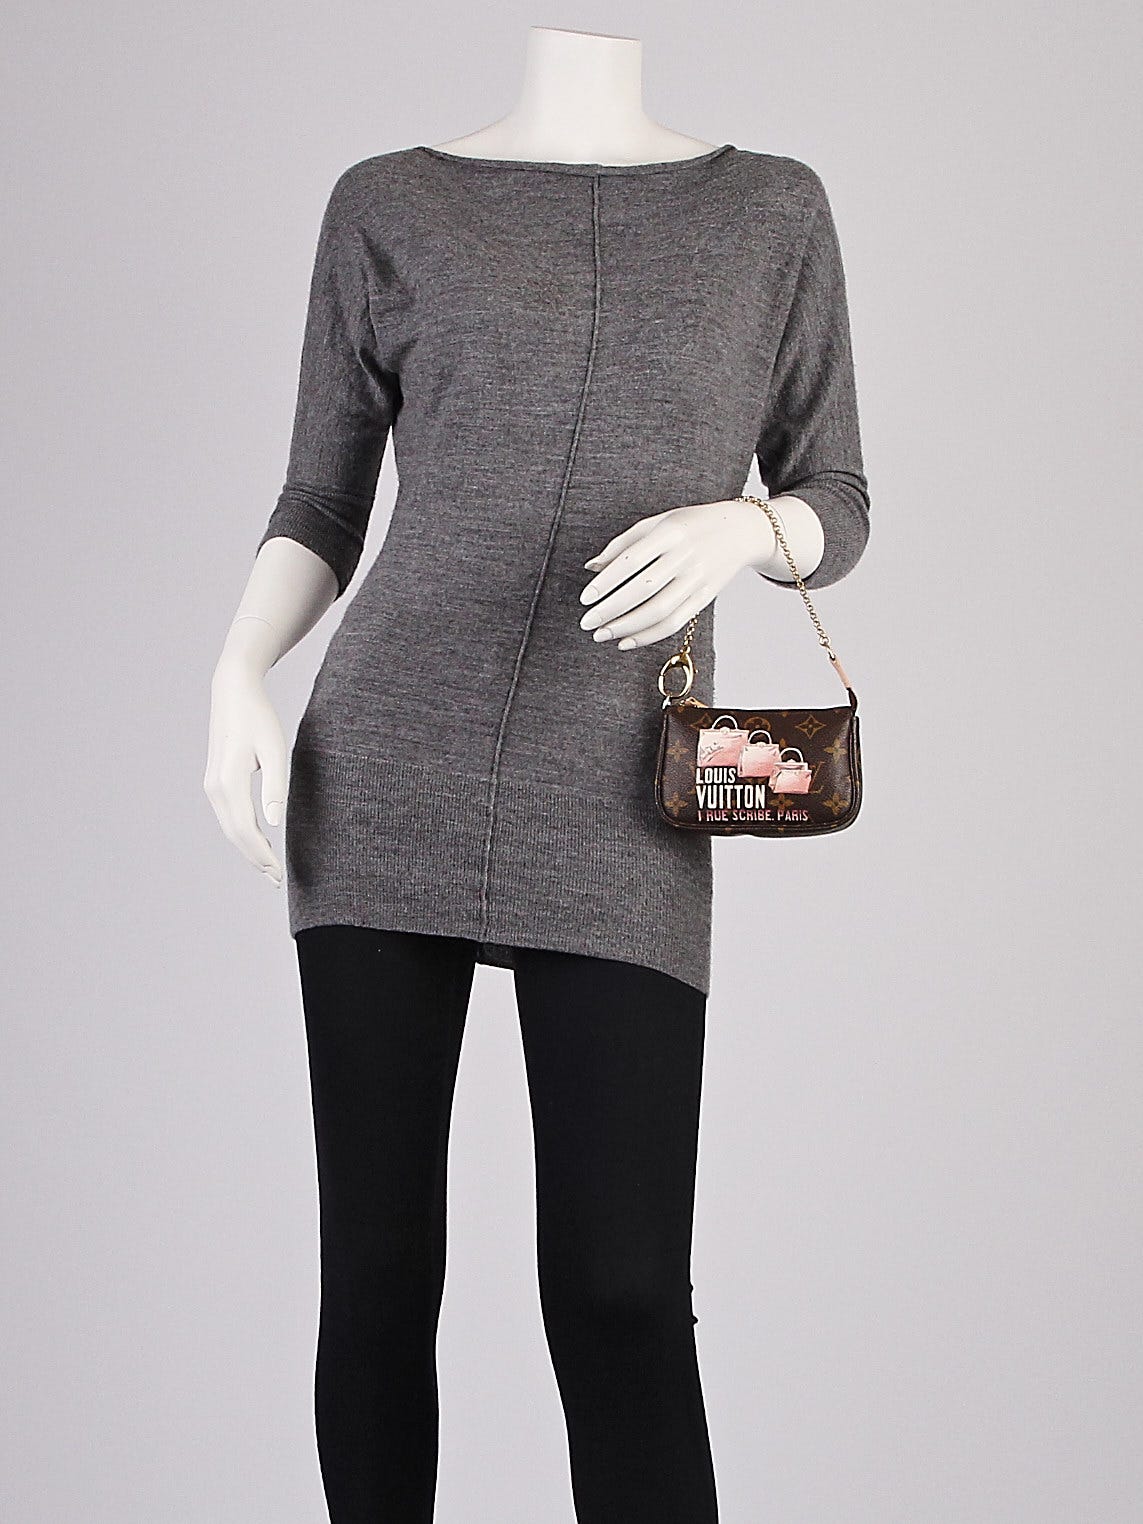 Louis Vuitton Limited Edition Monogram Canvas '1 Rue Scribe, Paris' Mini  Accessories Pochette Bag - Yoogi's Closet